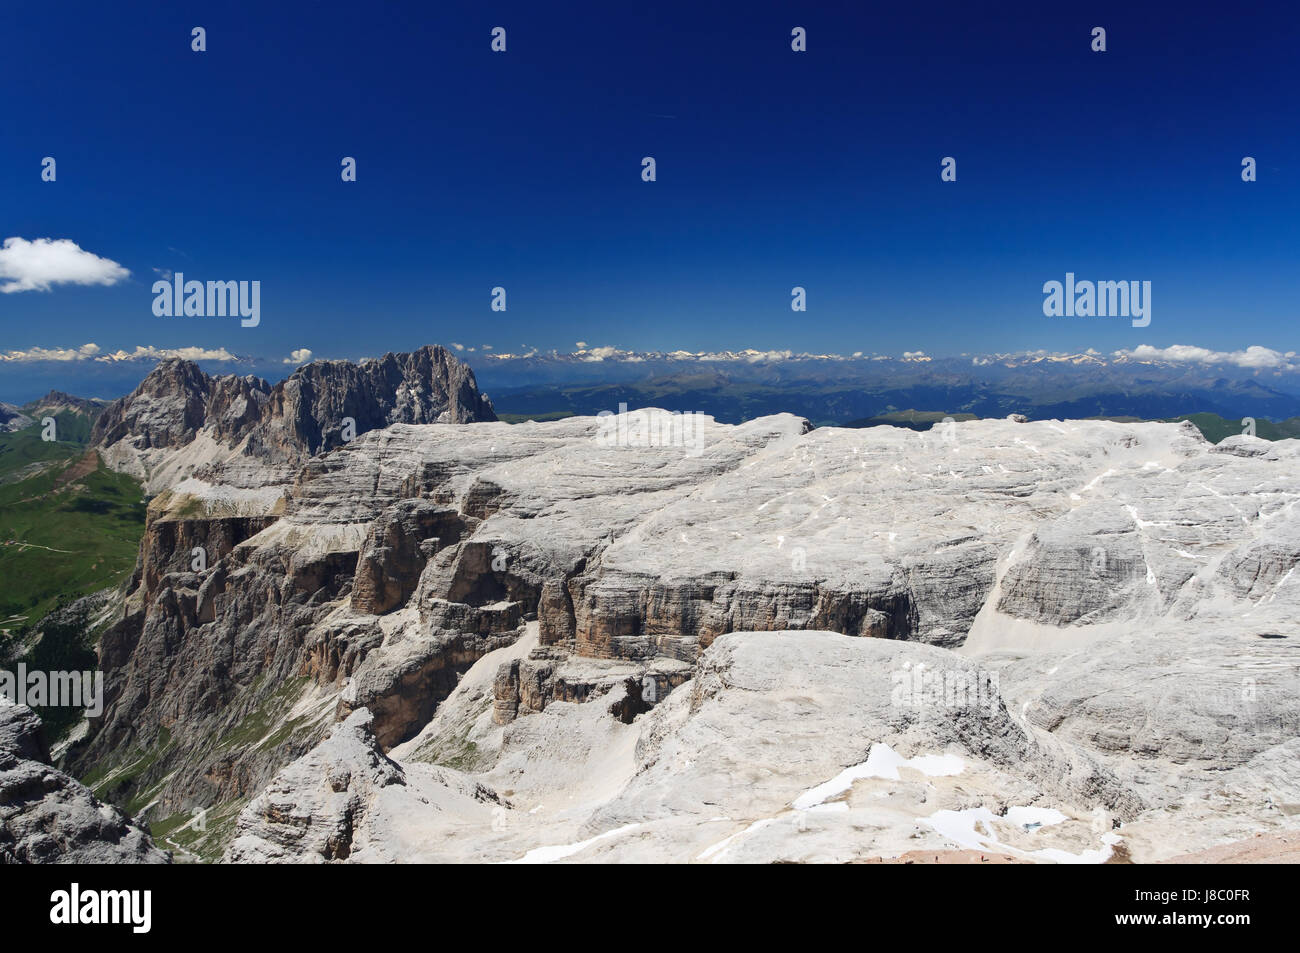 Dolomiten, Alpen, Sommer, sommerlich, Anblick, Ausblick, Outlook, Perspektive, Vista, Stockfoto